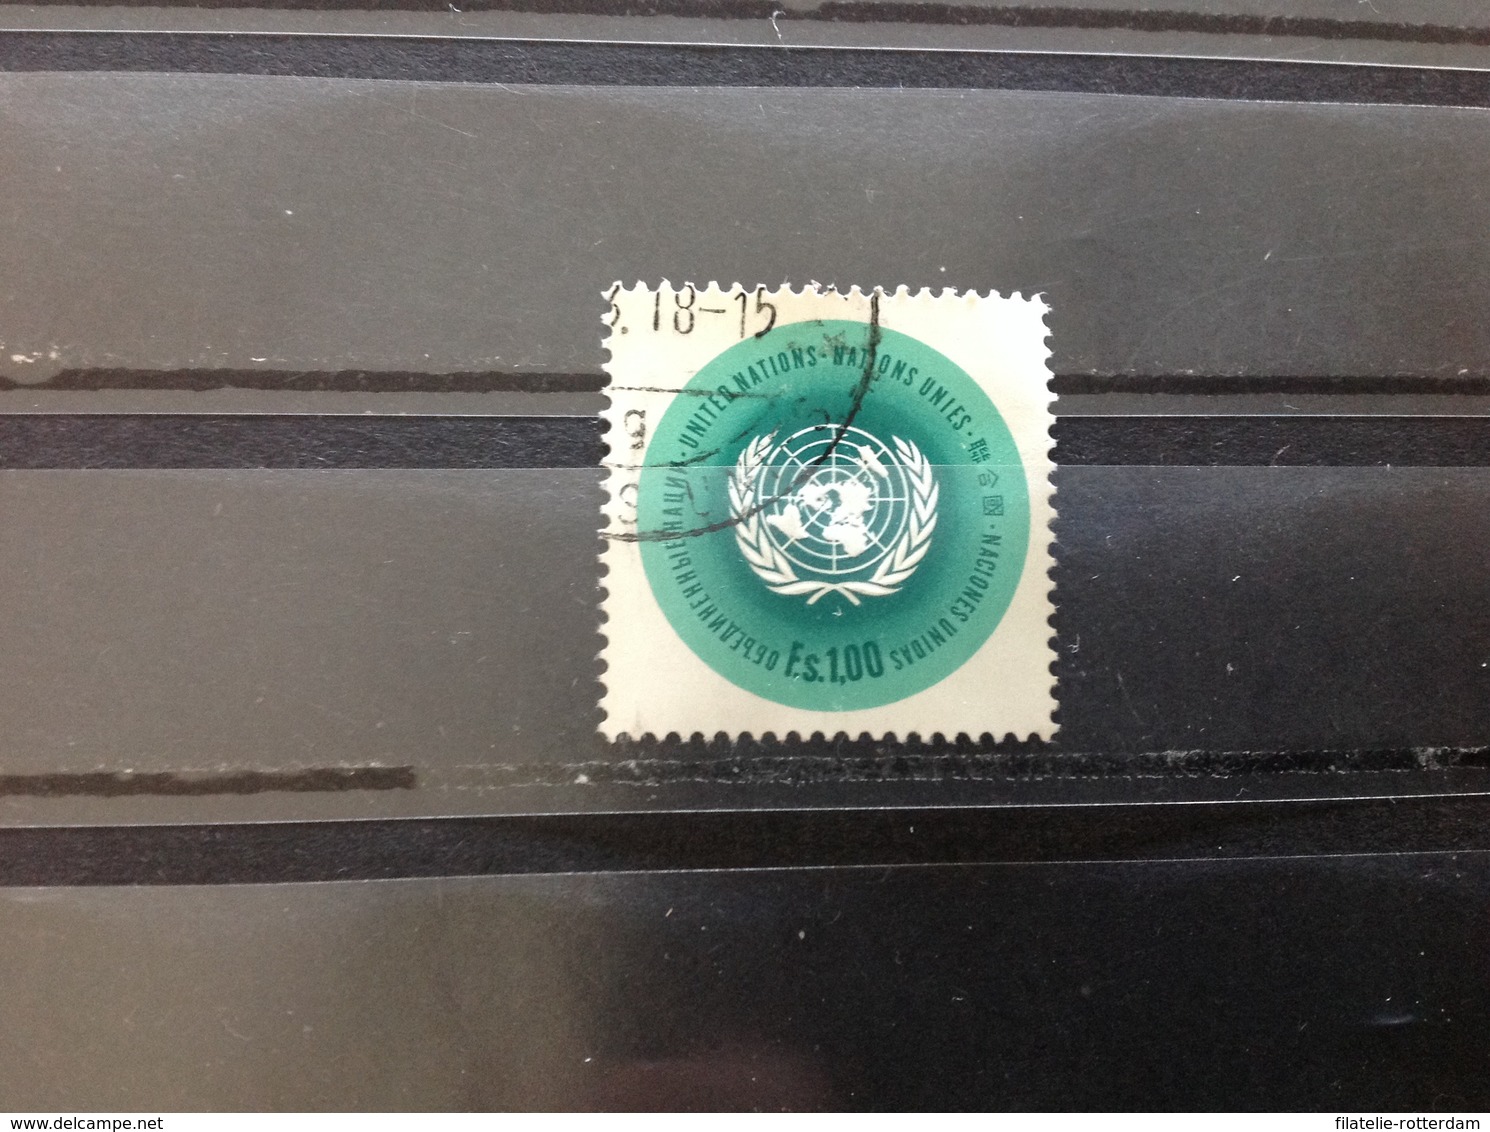 VN / UN - UNO-Embleem (1) 1969 - Used Stamps